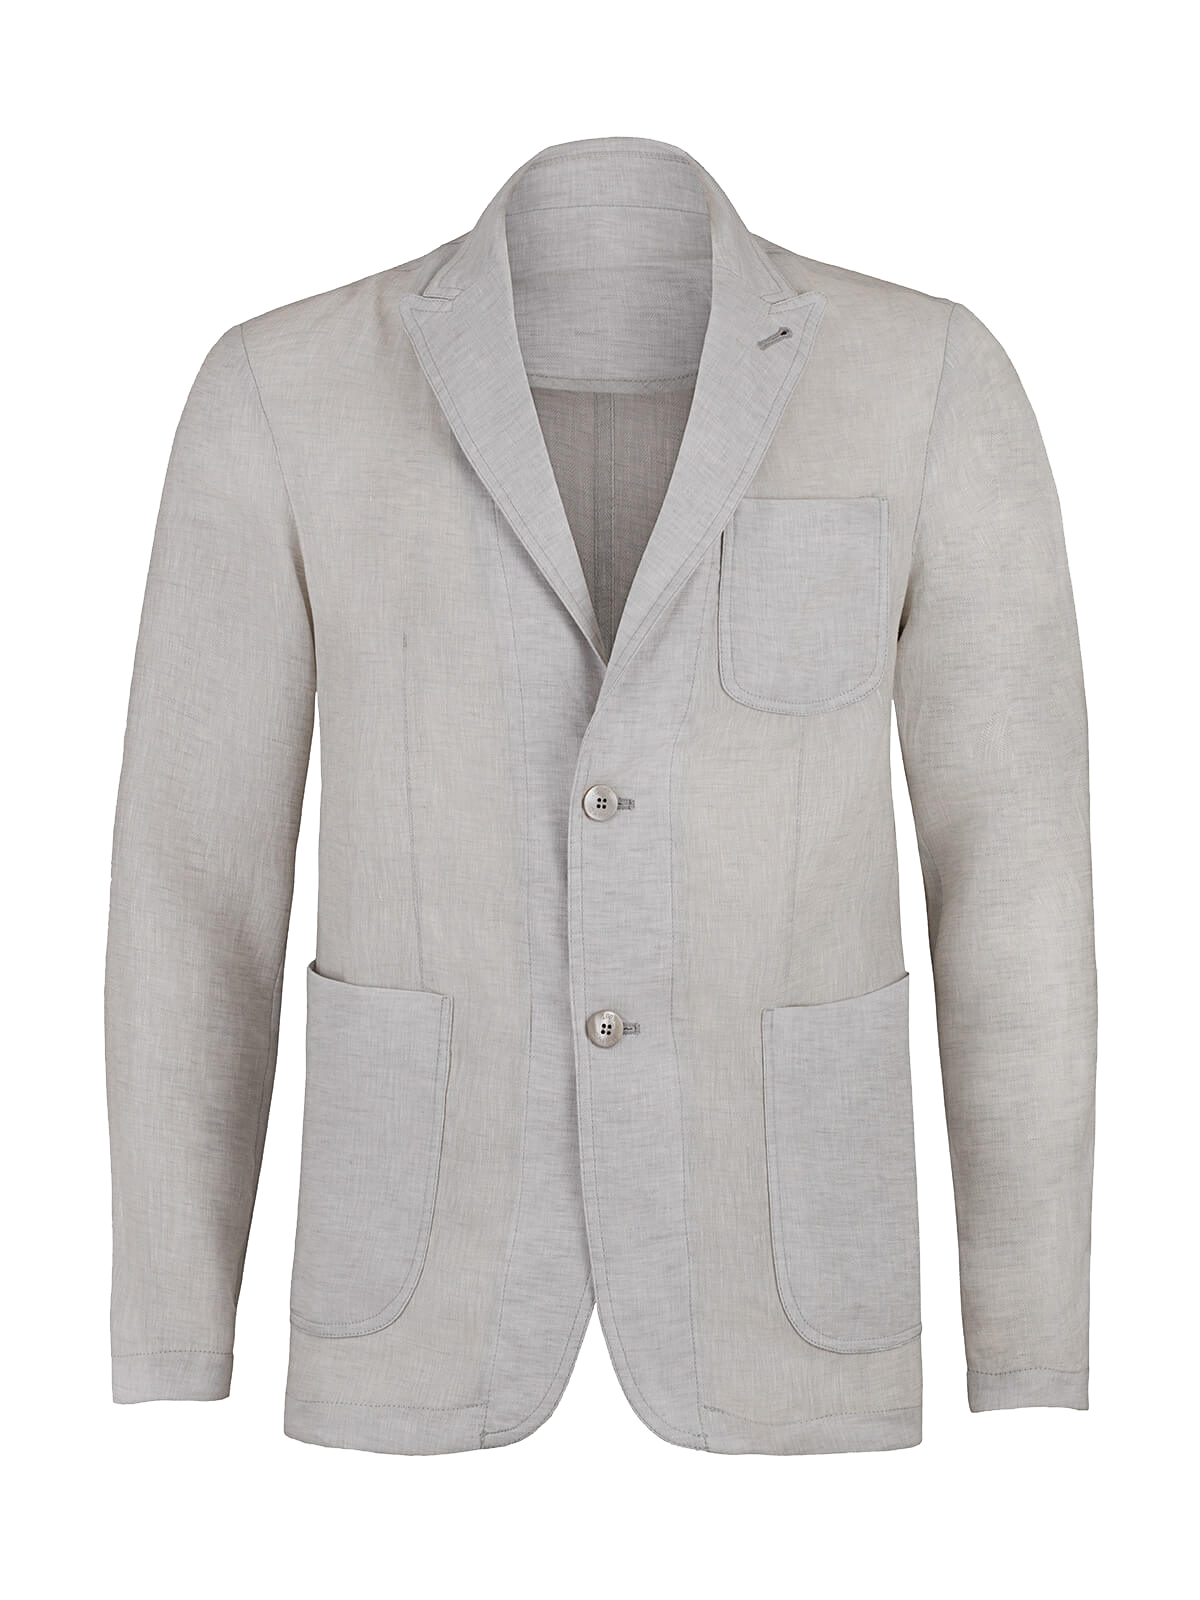 Giacca St. Tropez 100% Capri light grey linen jacket for man  front